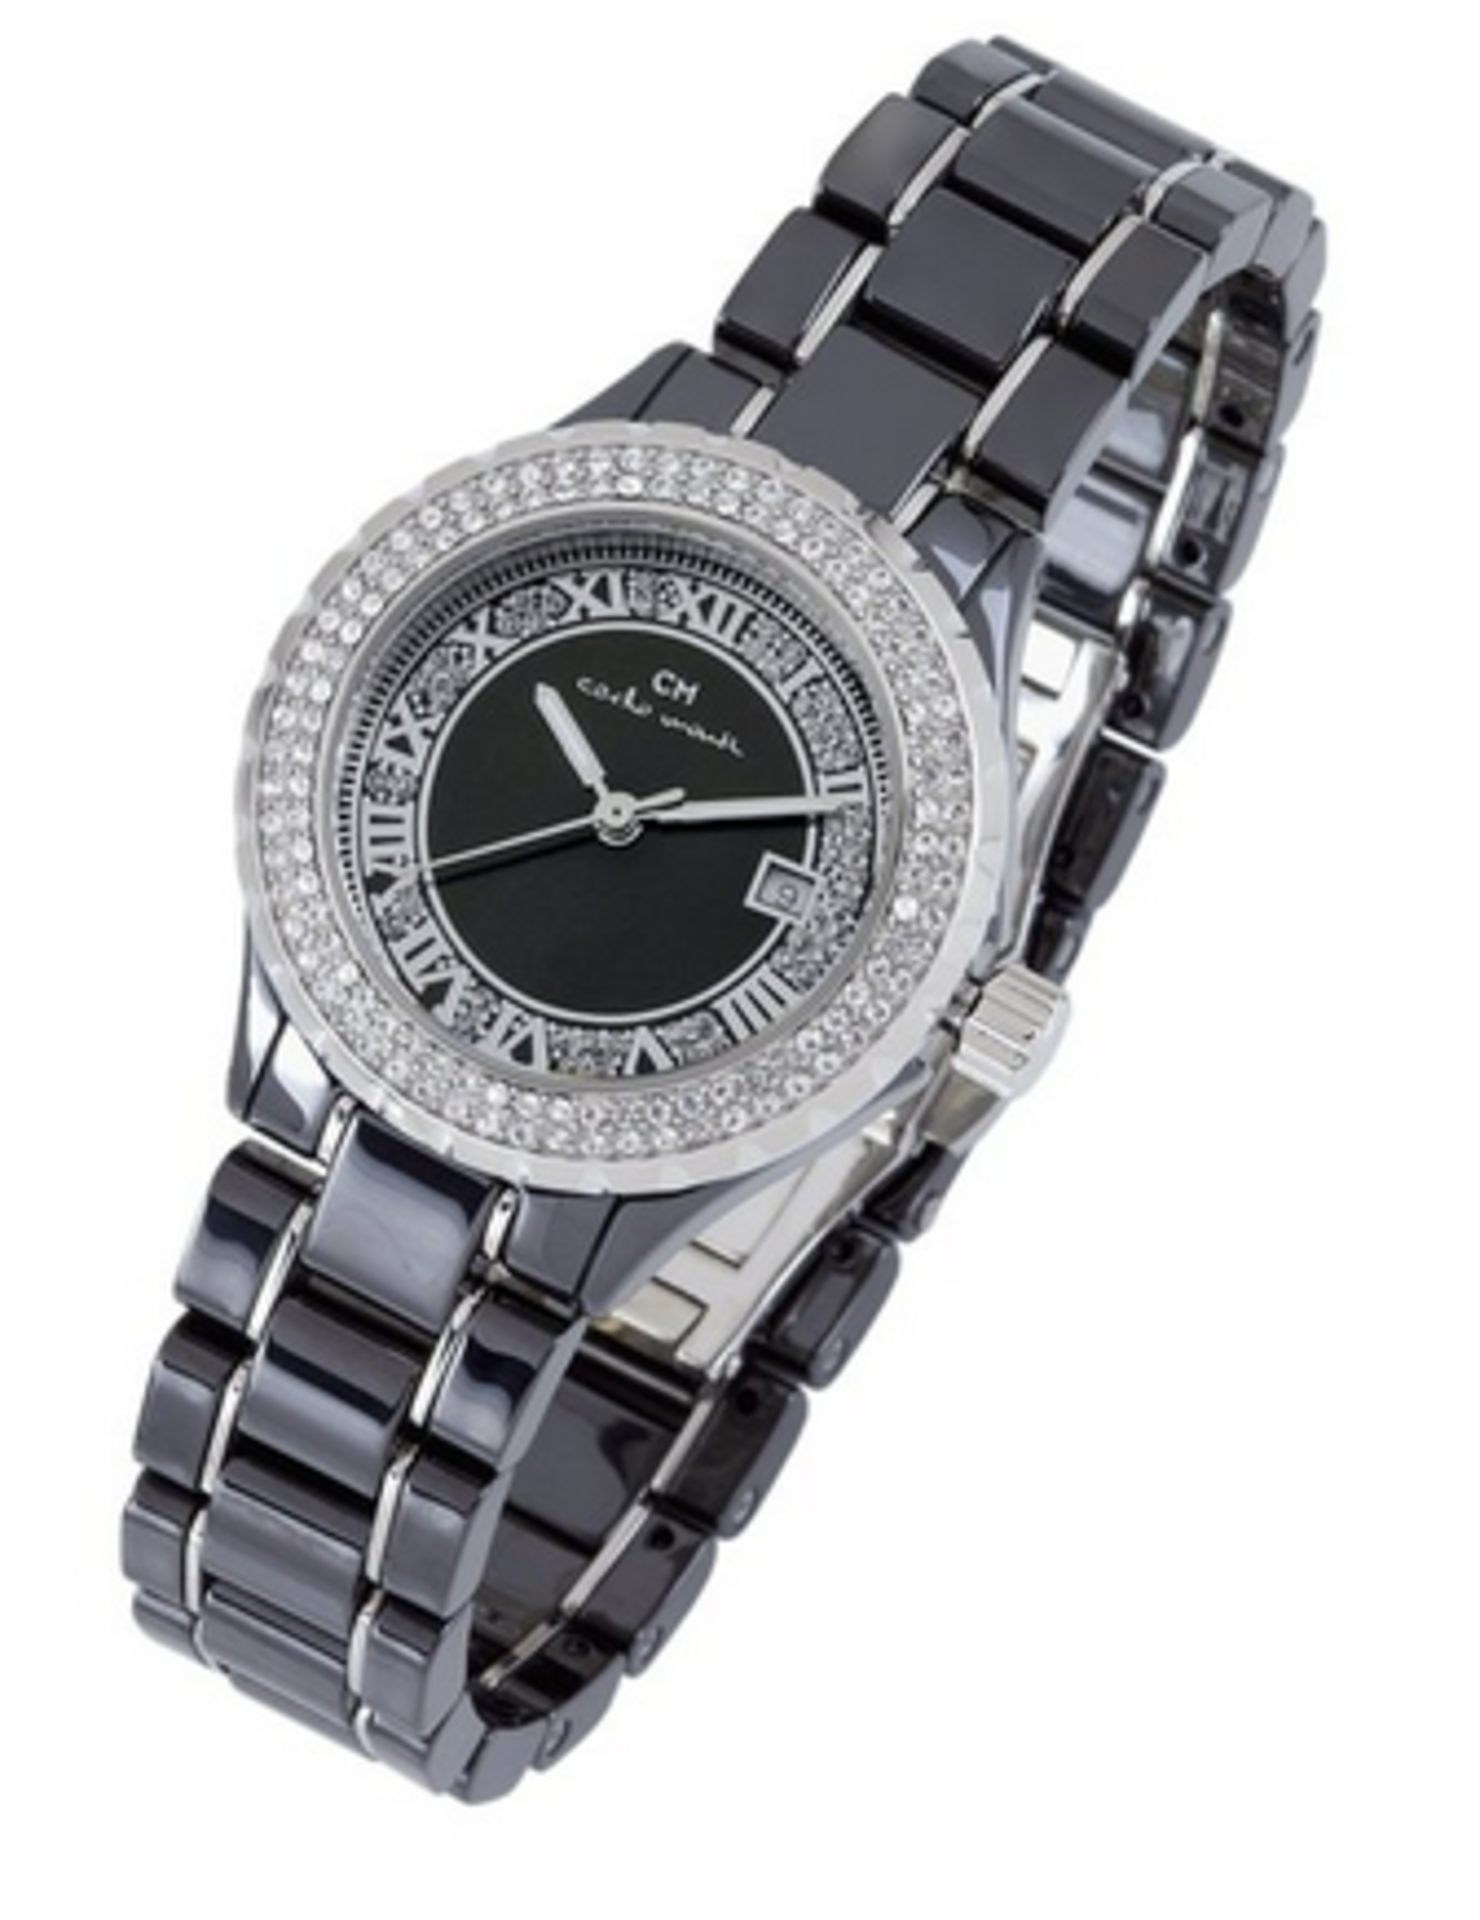 Carlo Monti Ladies Watch, Mother Of Pearl Dial, Black Ceramic Bracelet RRP £280 - Image 2 of 3